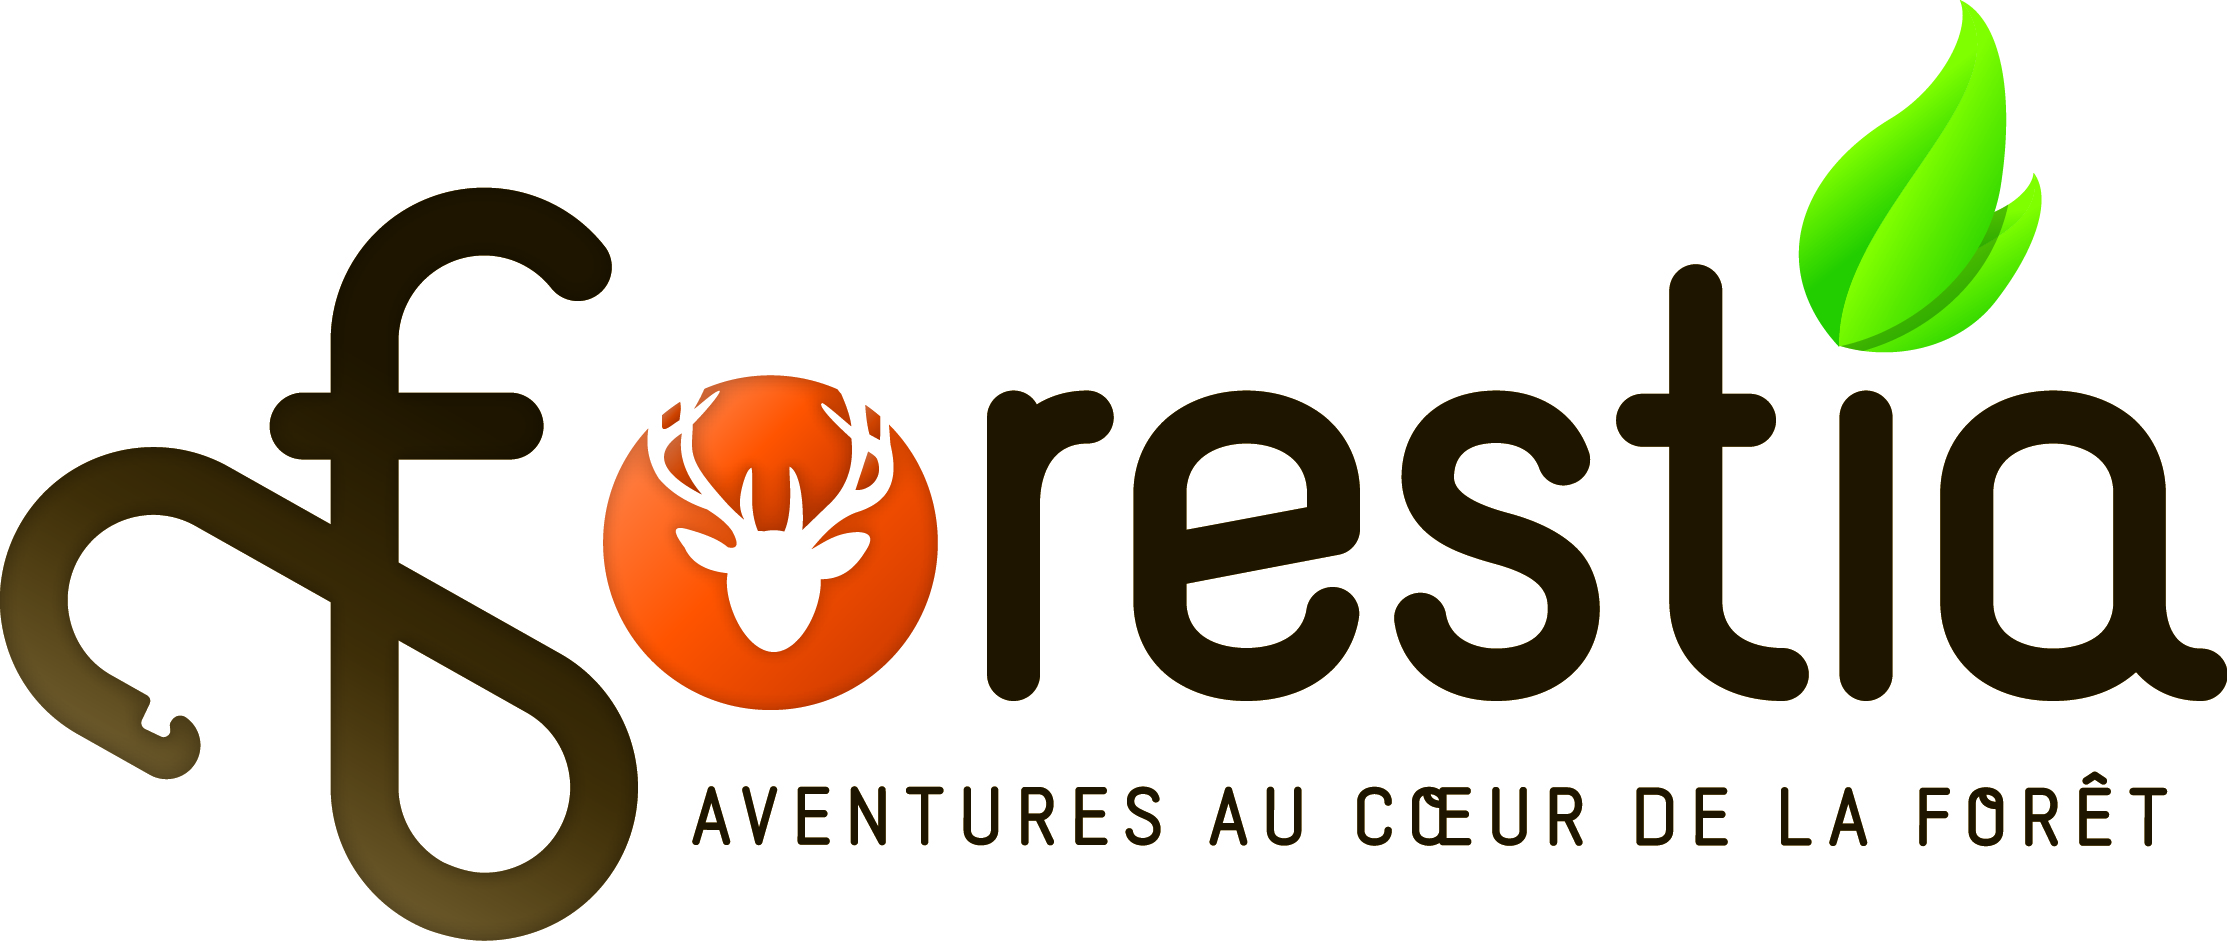 Forestia - Parc animalier et aventure